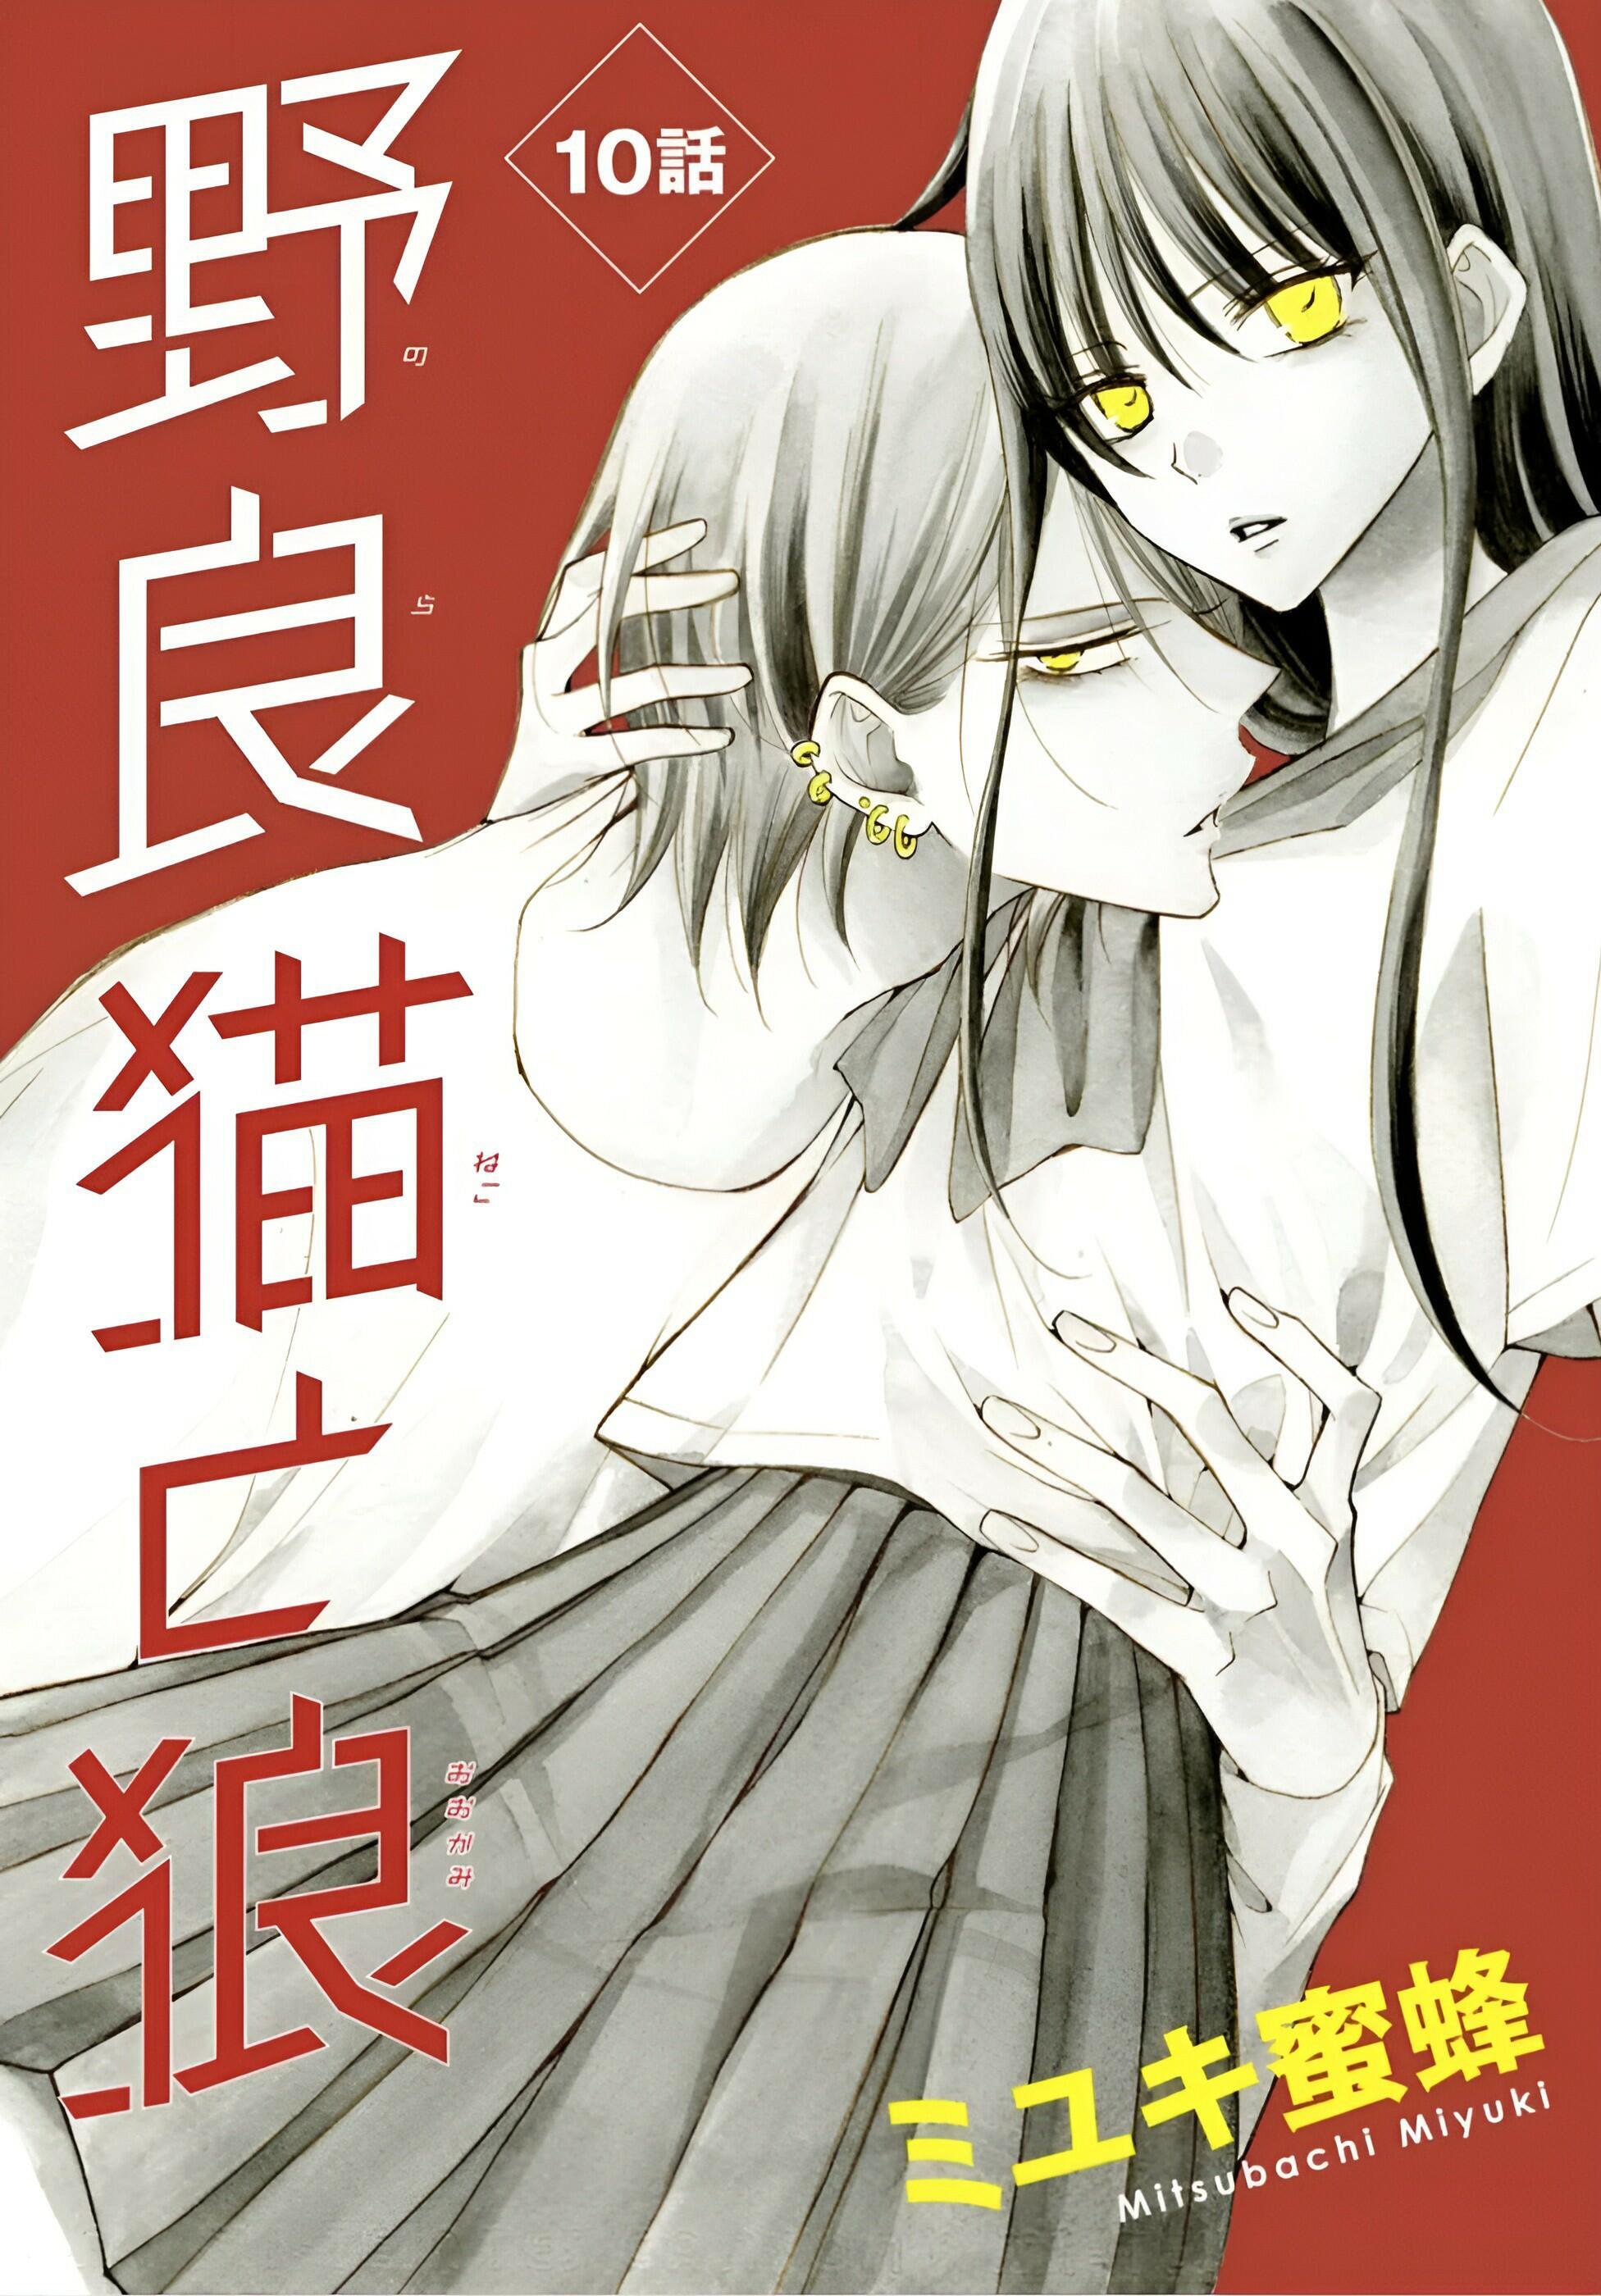 Stray Cat And Wolf Manga Read Noraneko To Ookami Vol.3 Chapter 10 - Manganelo